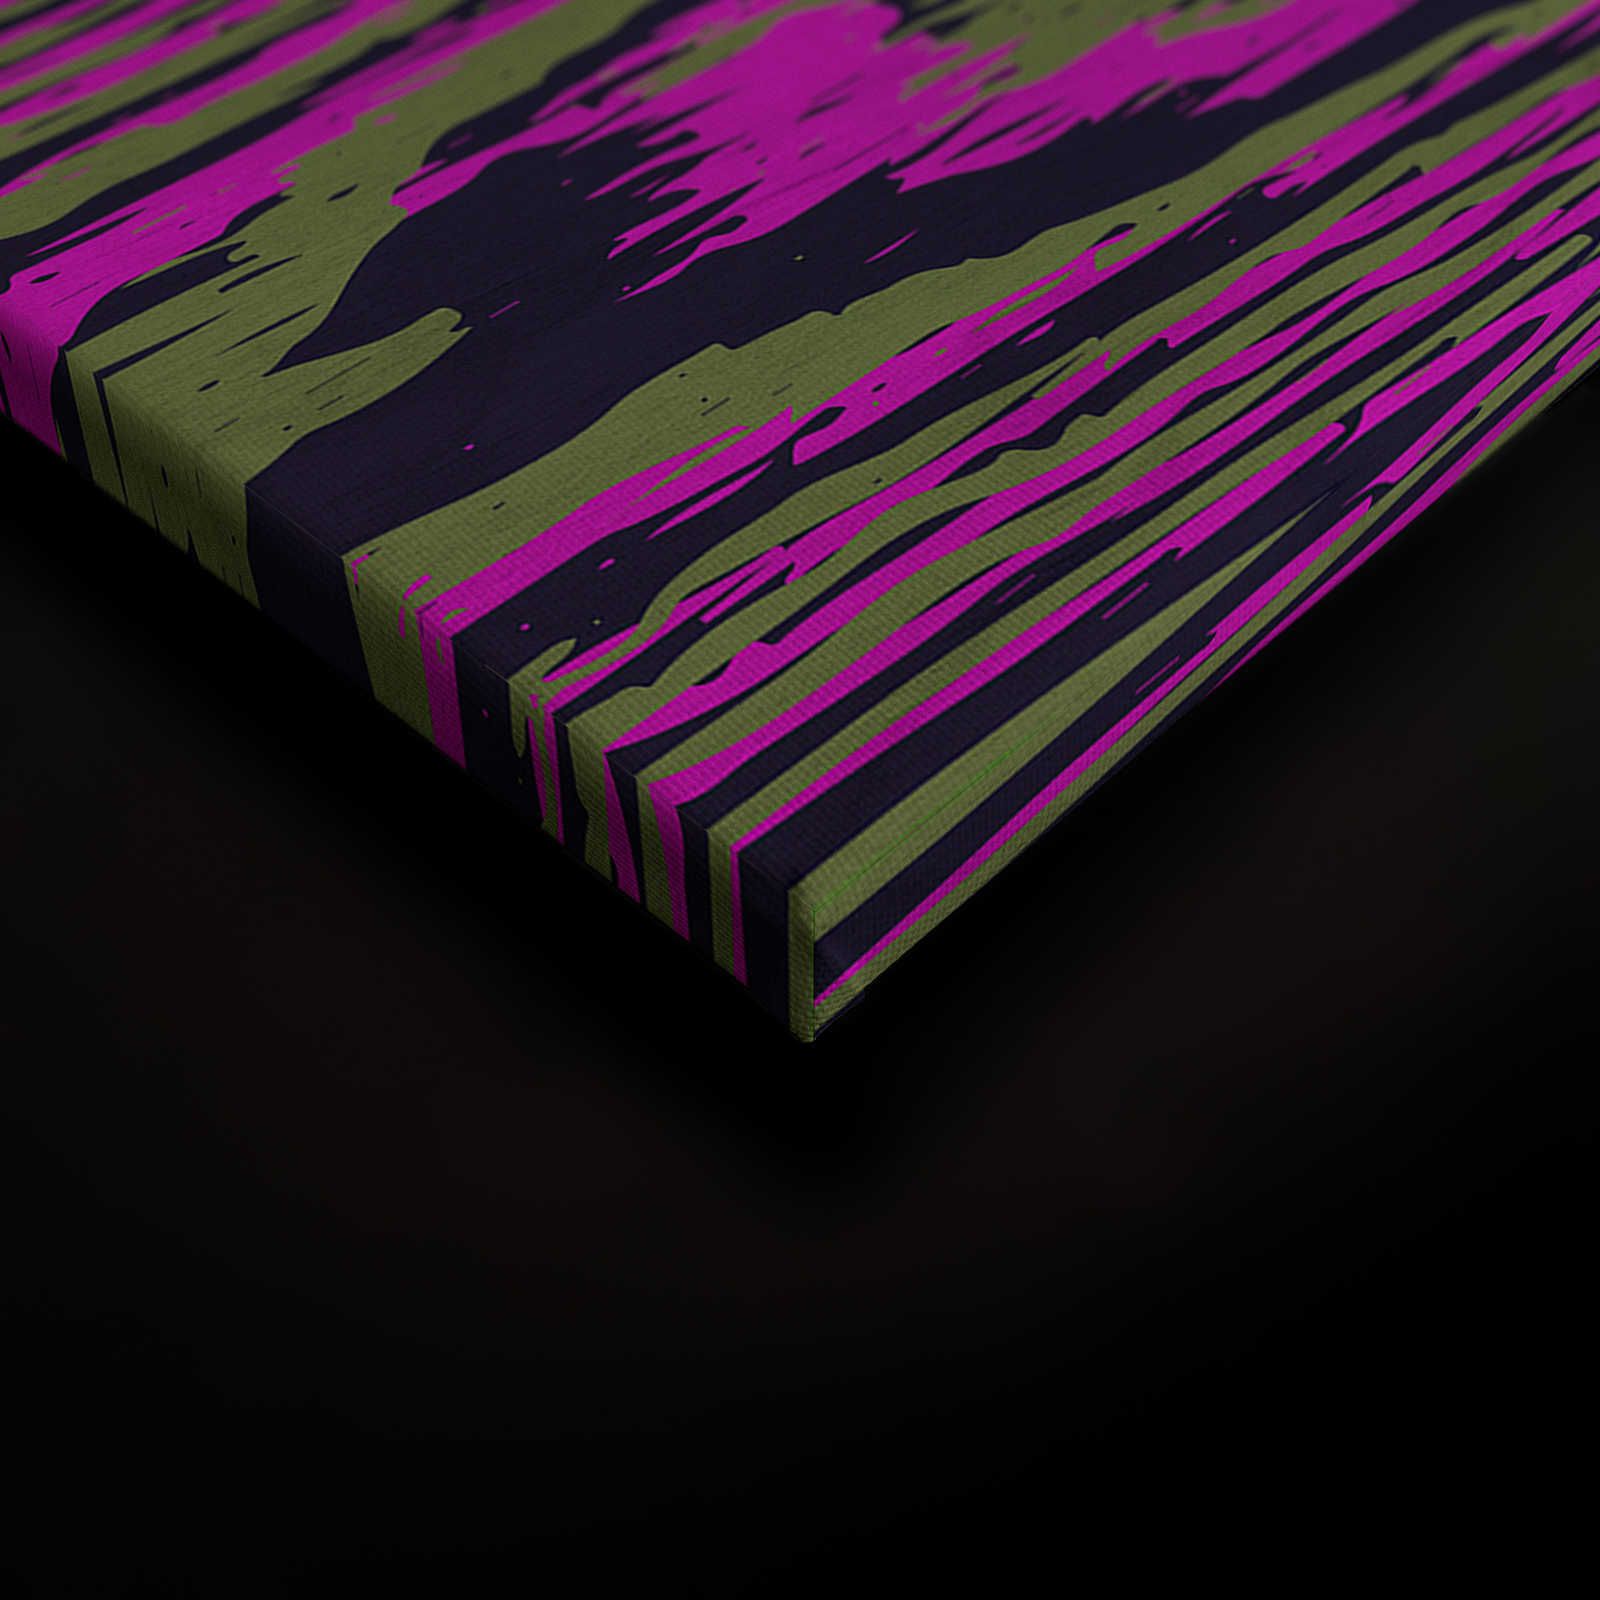             Kontiki 2 - Leinwandbild Neonfarbene Holzmaserung, Pink & Schwarz – 0,90 m x 0,60 m
        